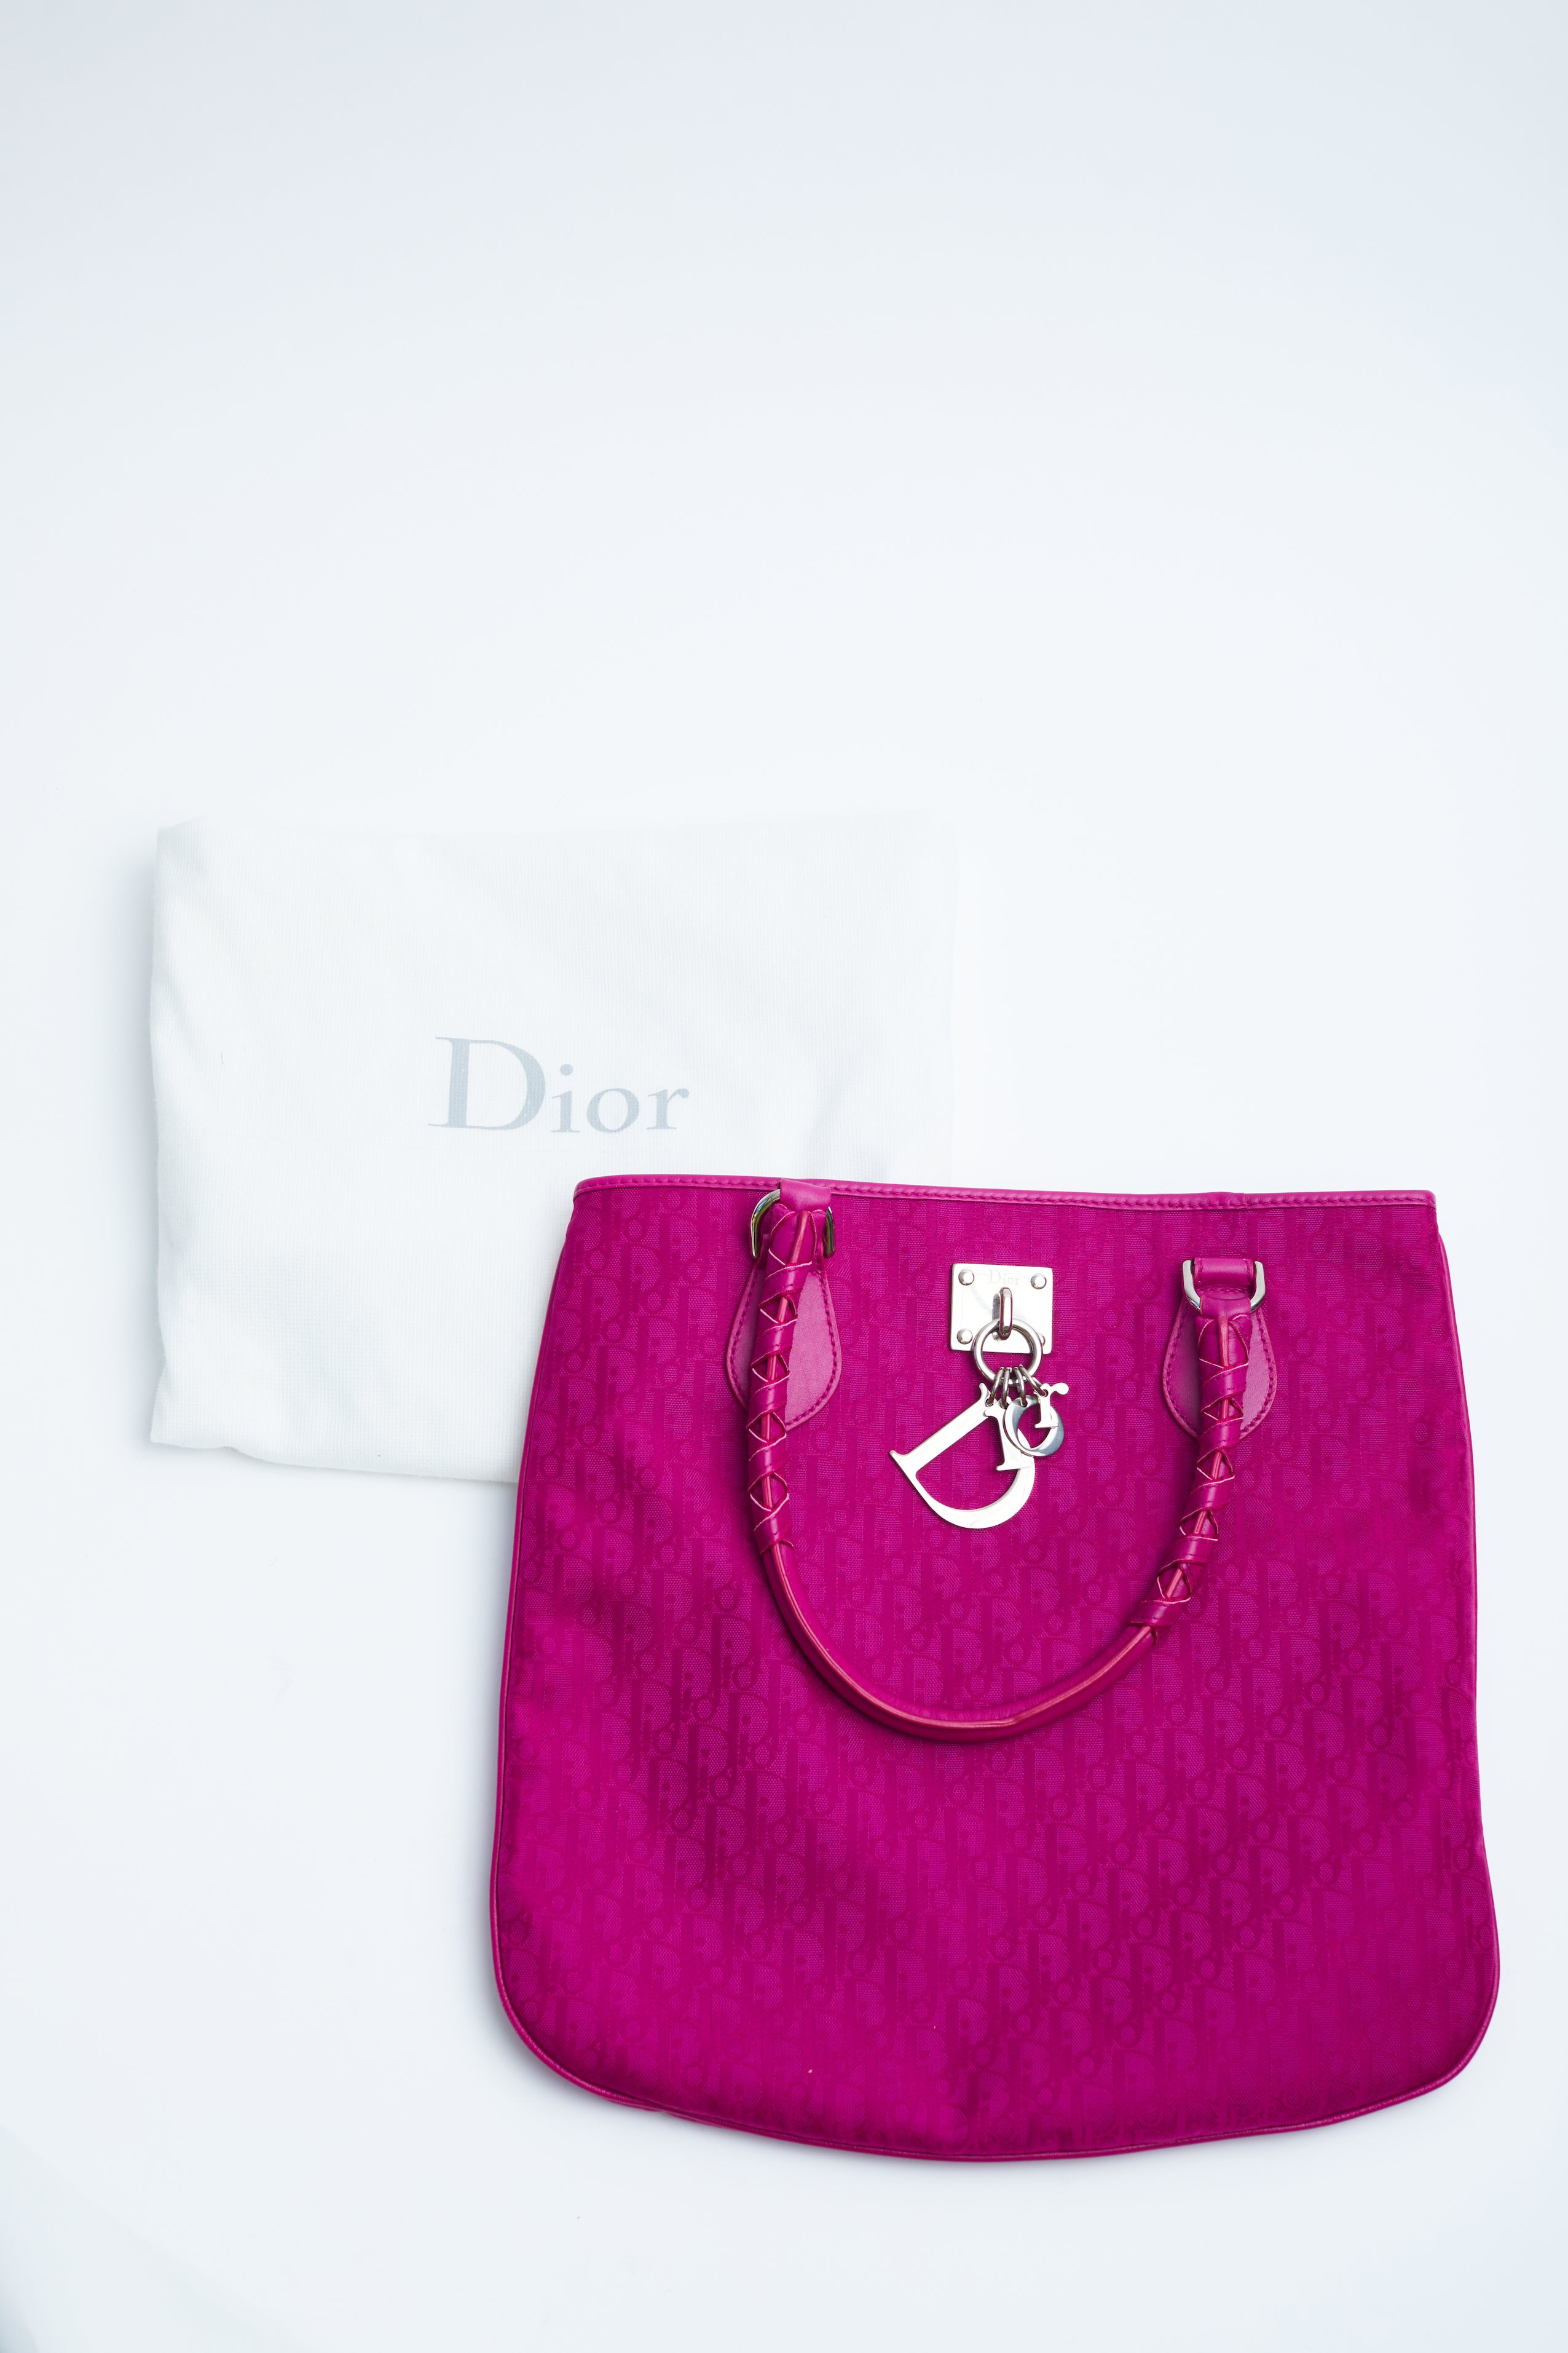 Christian Dior <br> Fuchsia pink monogram logo Dior charm tote